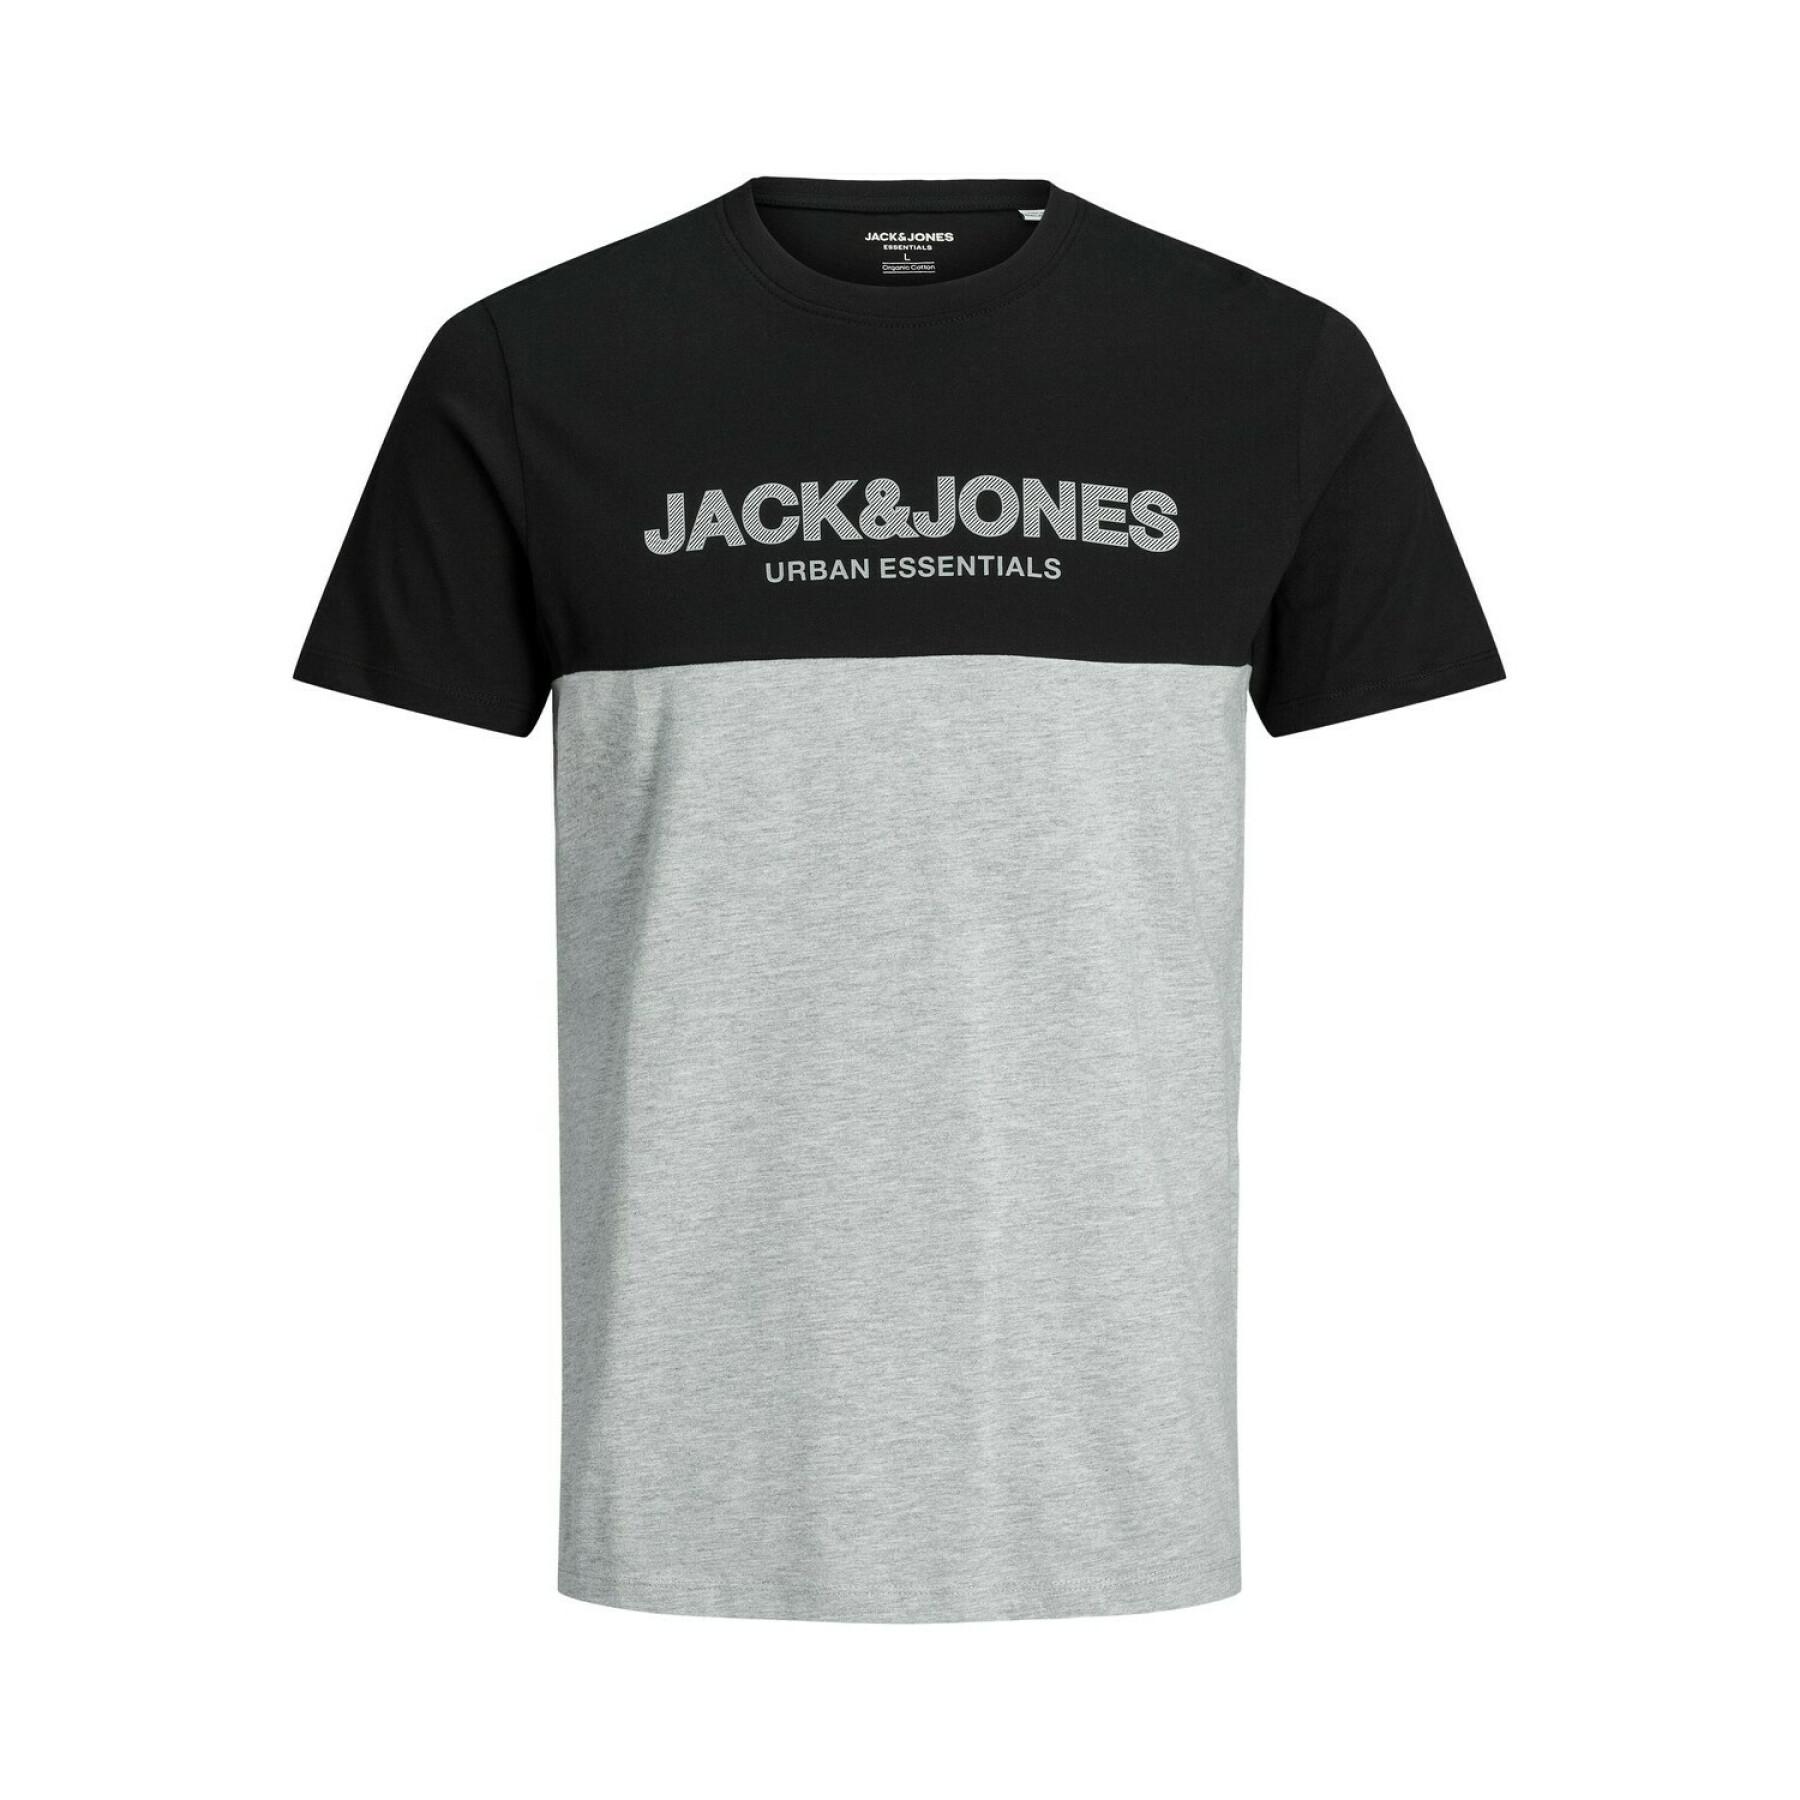 T-shirt large size Jack & Jones Urban